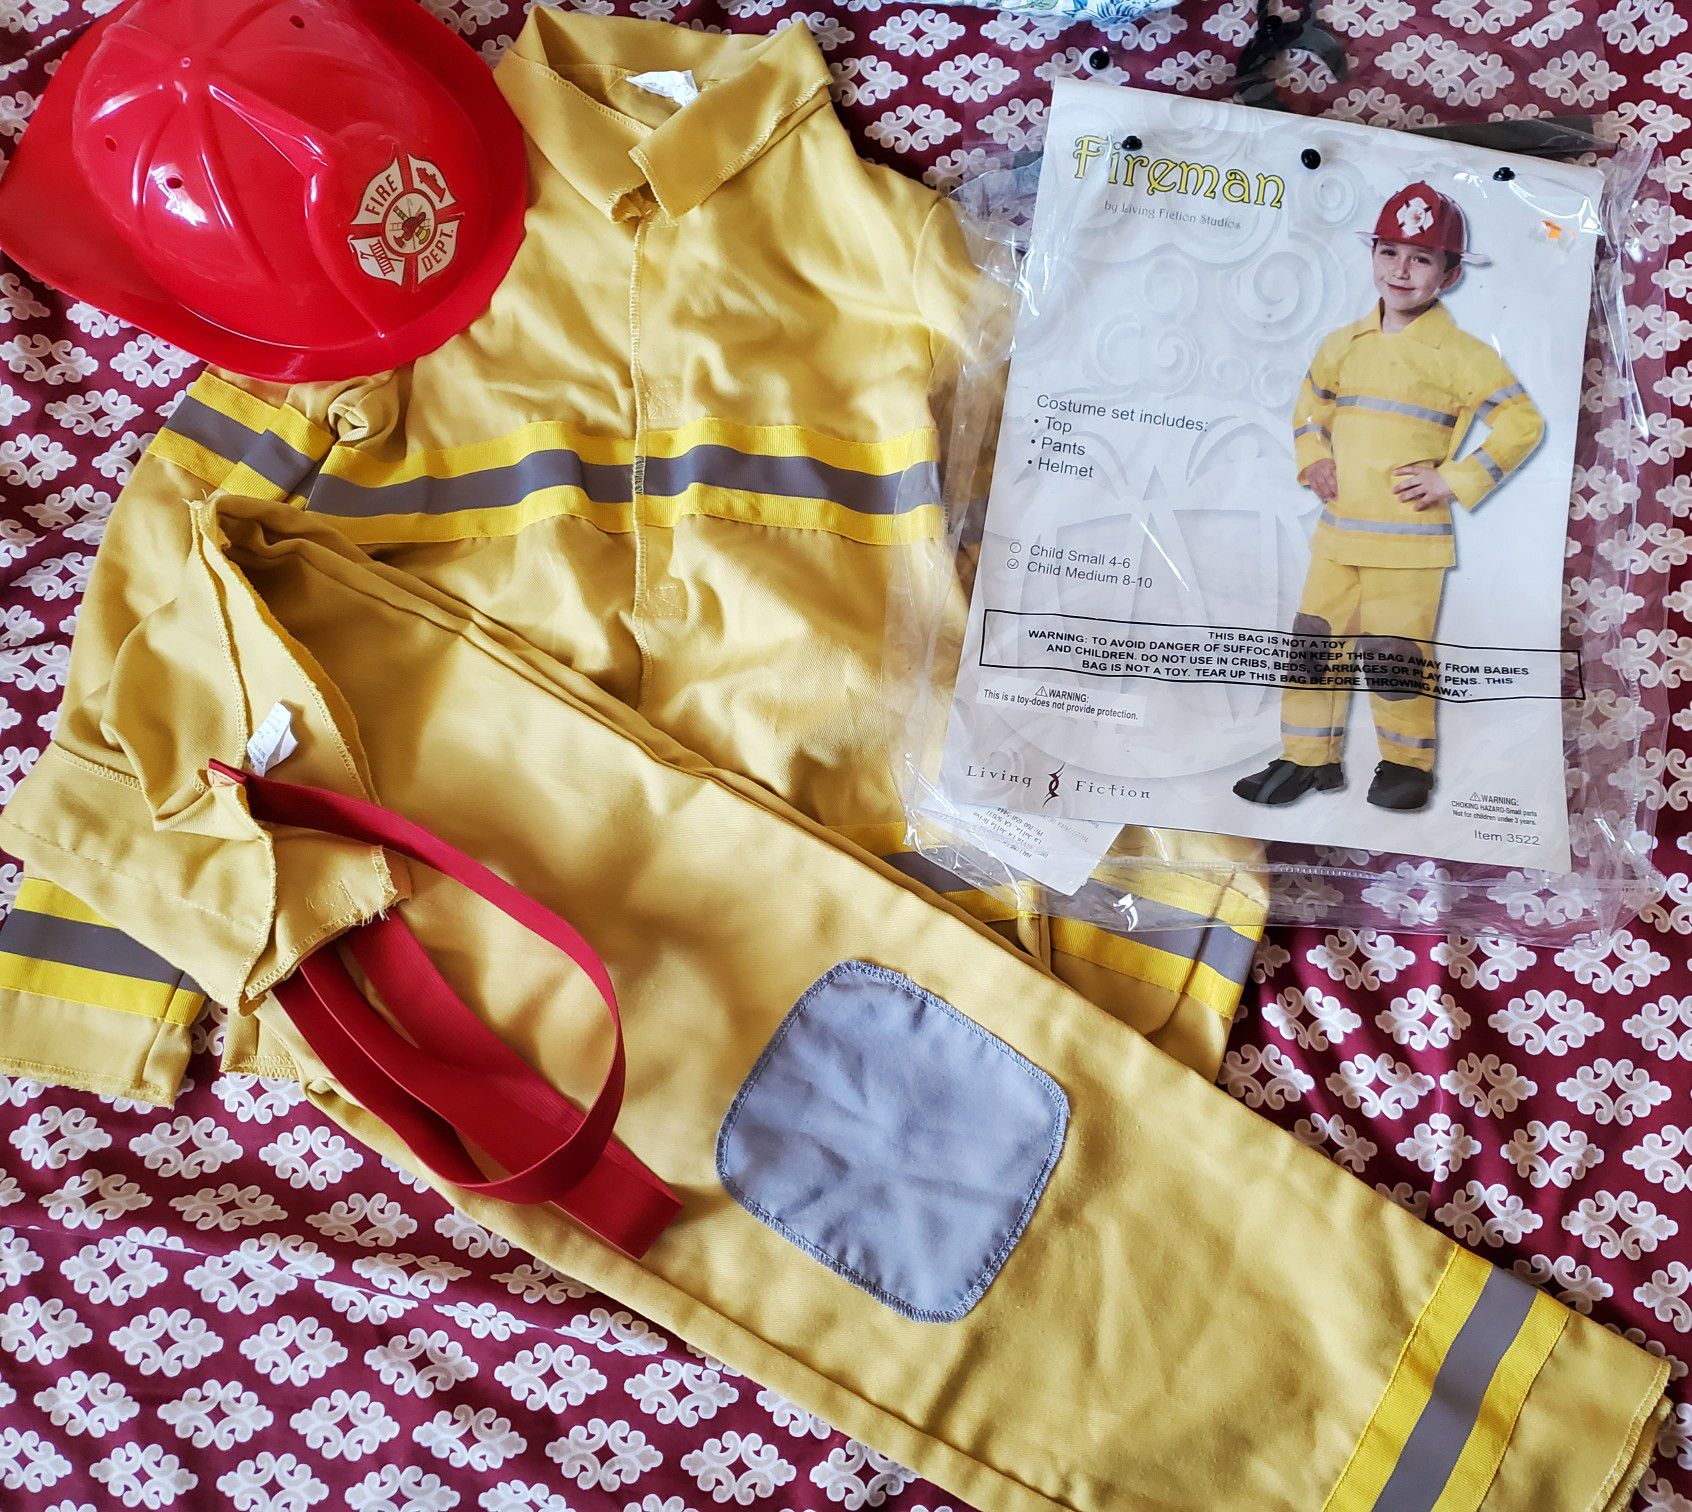 Fireman Halloween costume child 7-10 yrs old